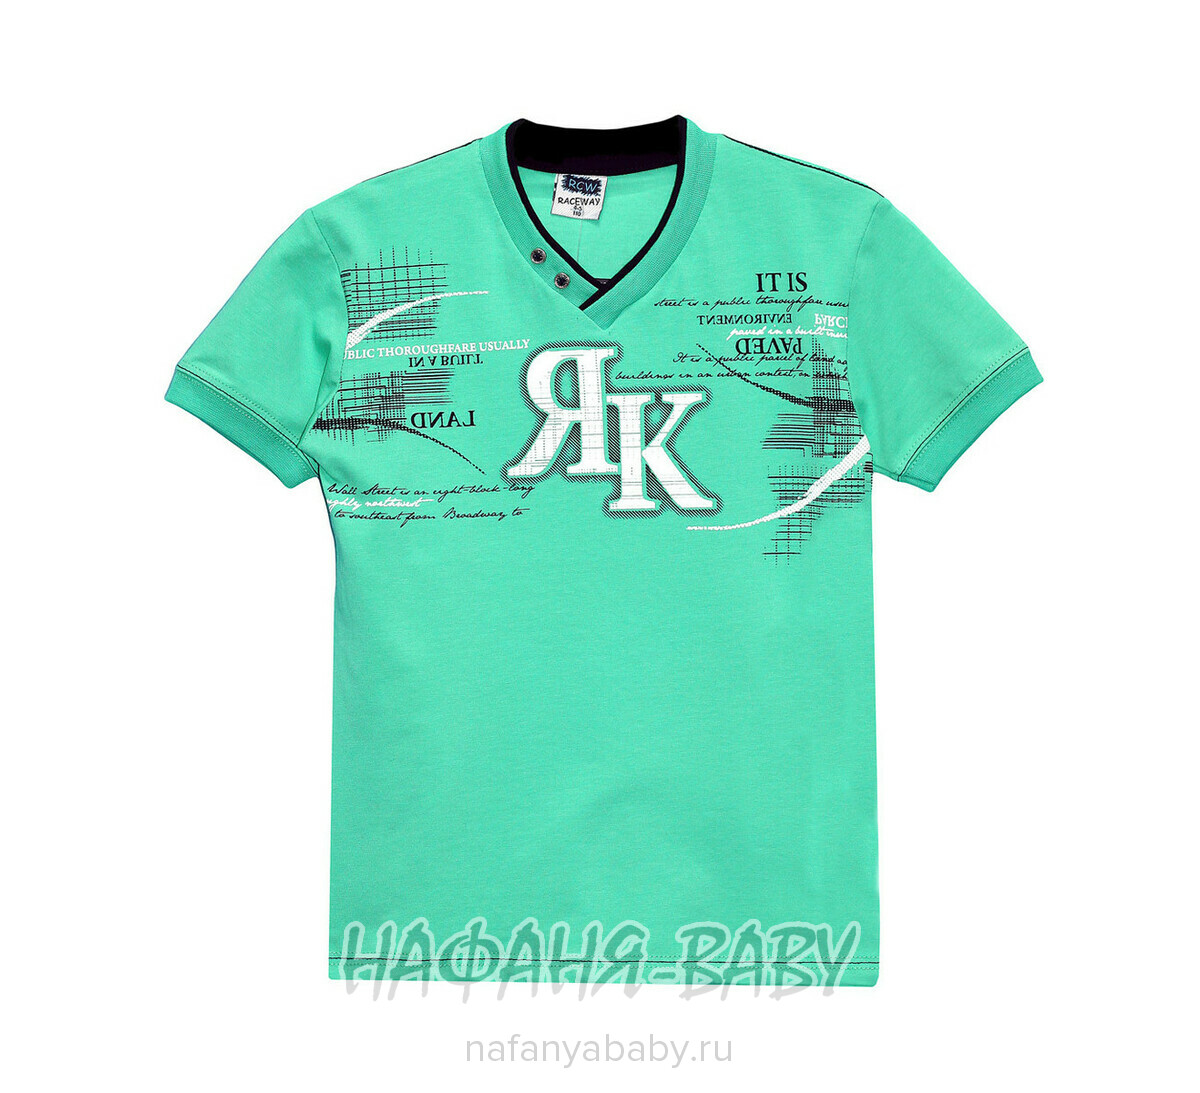 Подростковая футболка RCW, купить в интернет магазине Нафаня. арт: 6580.